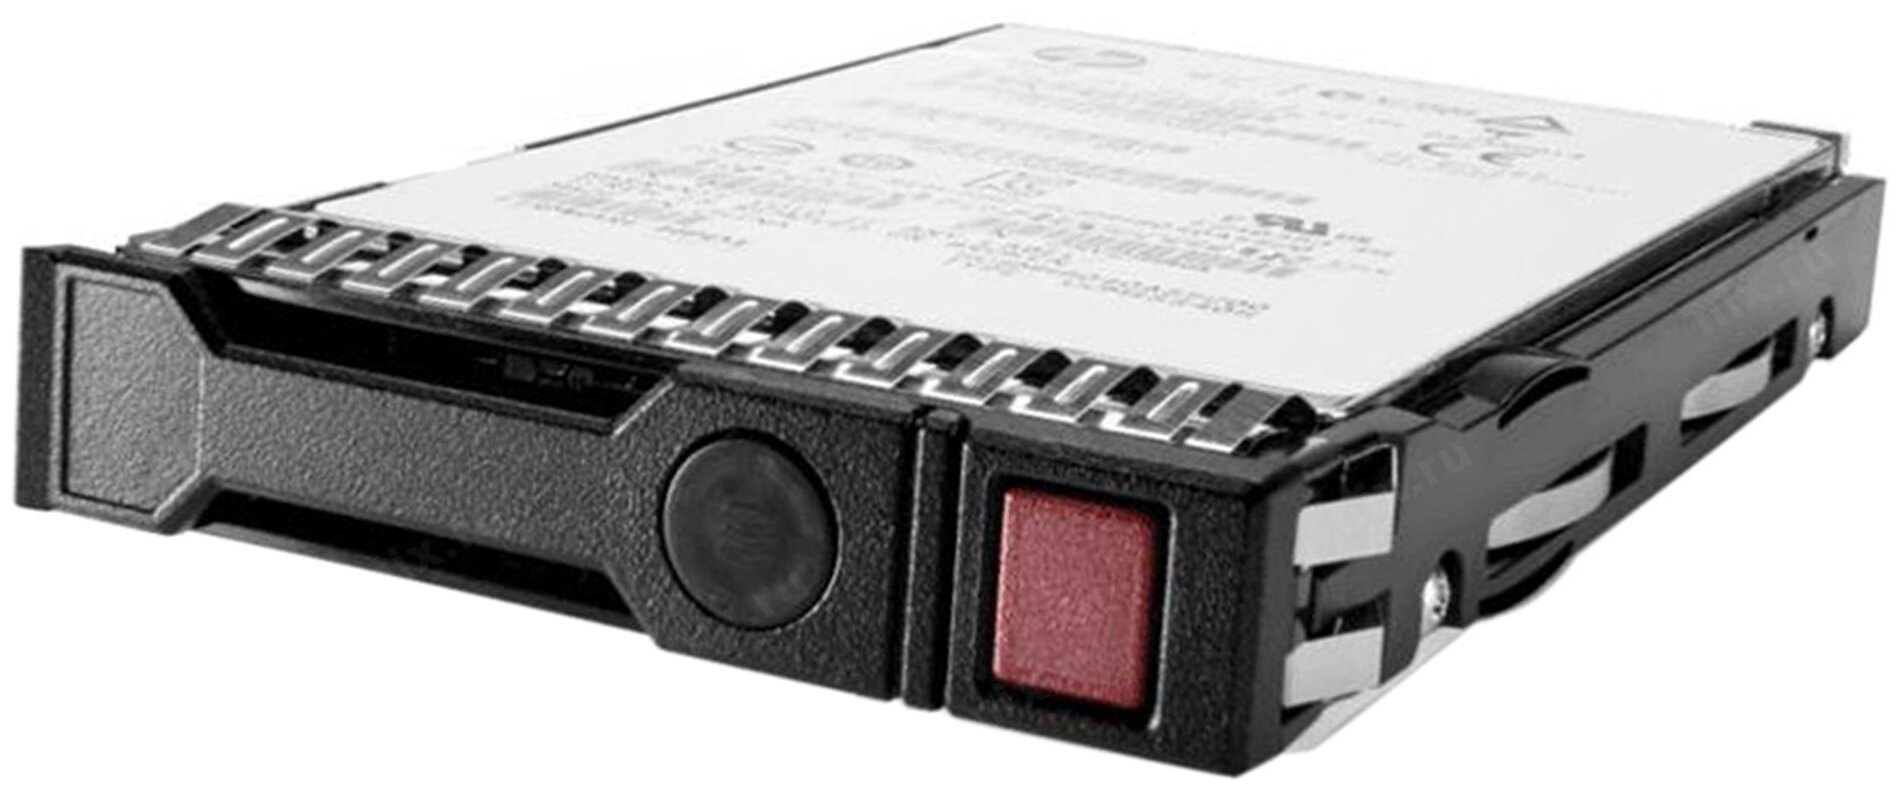 Диск HPE Накопитель на жестком магнитном диске HPE HPE 960GB SATA 6G Read Intensive SFF (2.5in) SC 3yr Wty Multi Vendor SSD